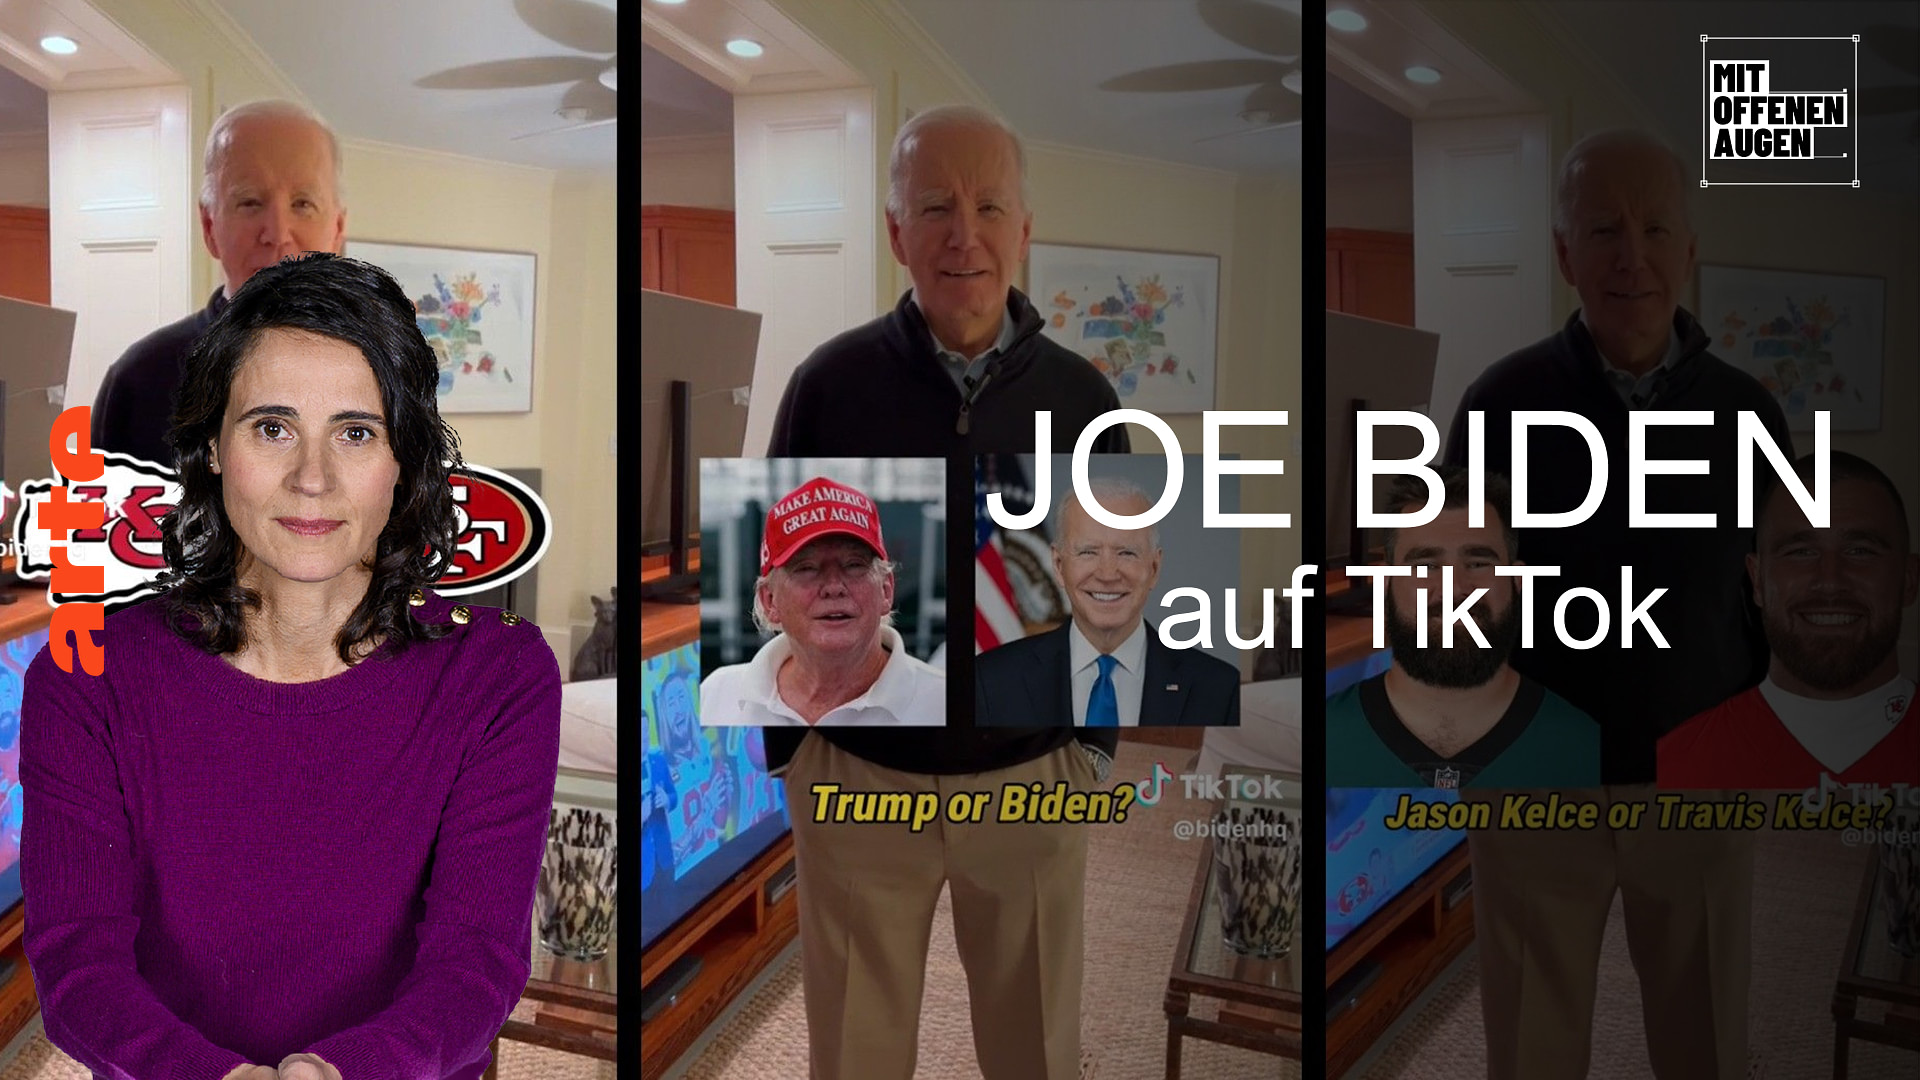 Joe Biden auf TikTok: Wahlkampf mal ganz anders